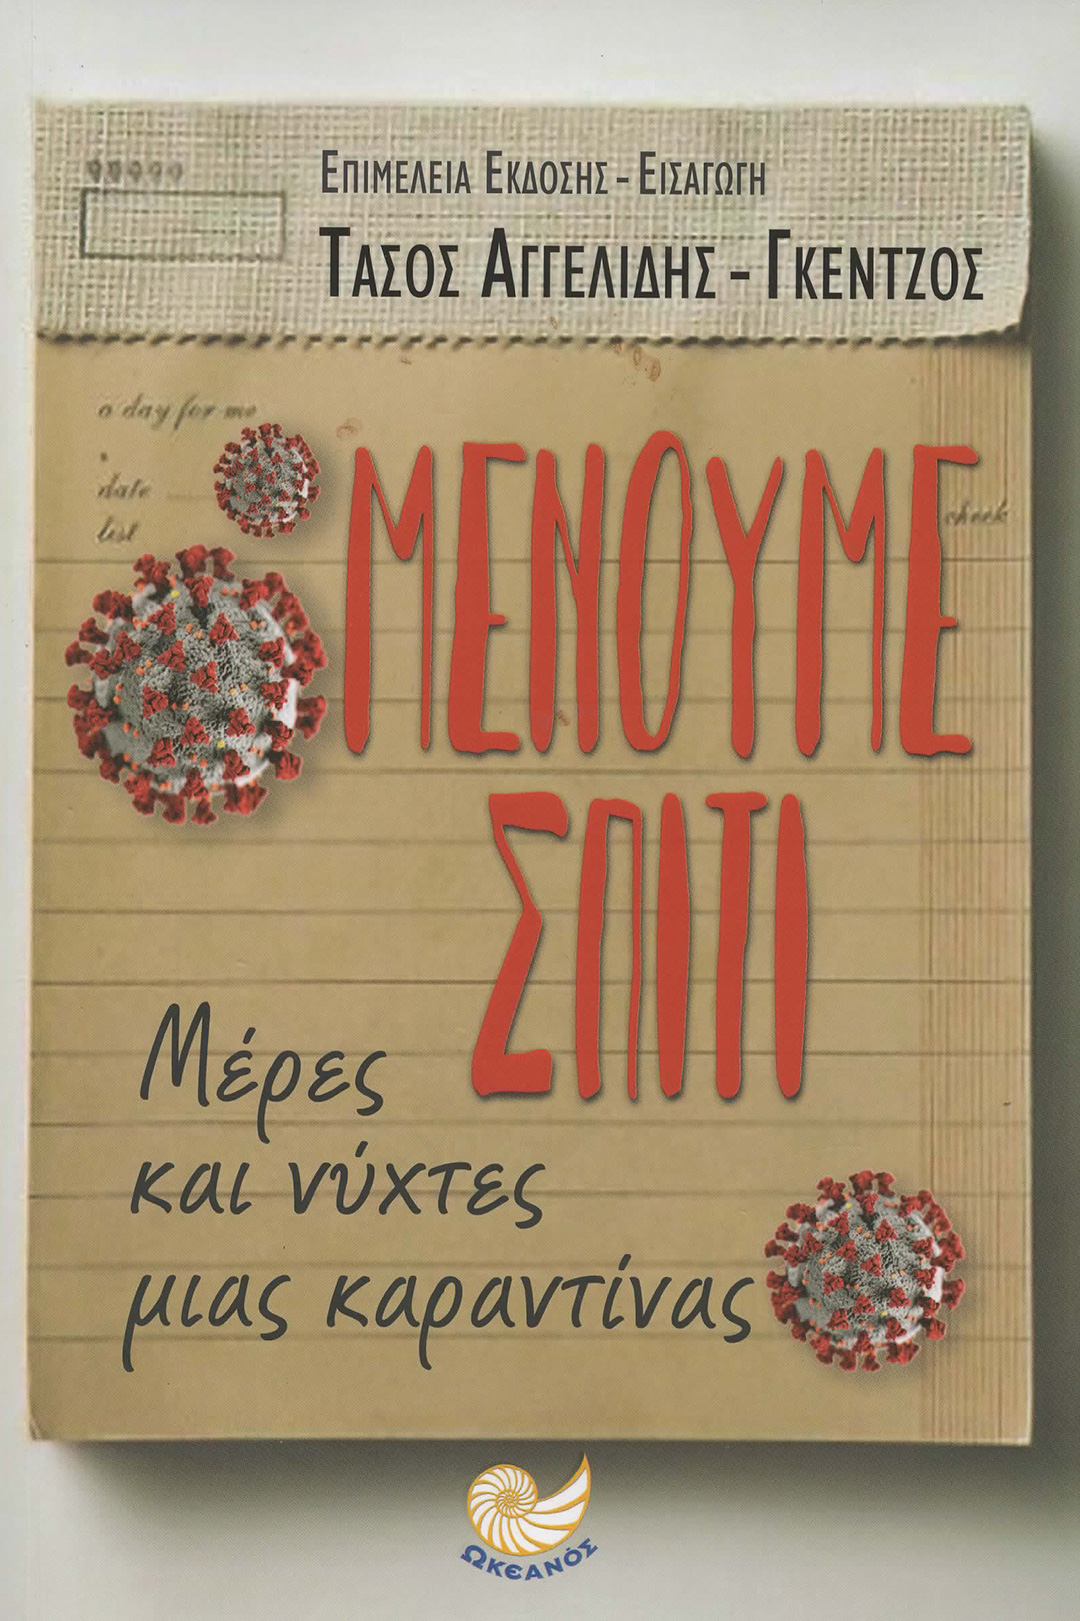 Menoyme Spiti Front Cover